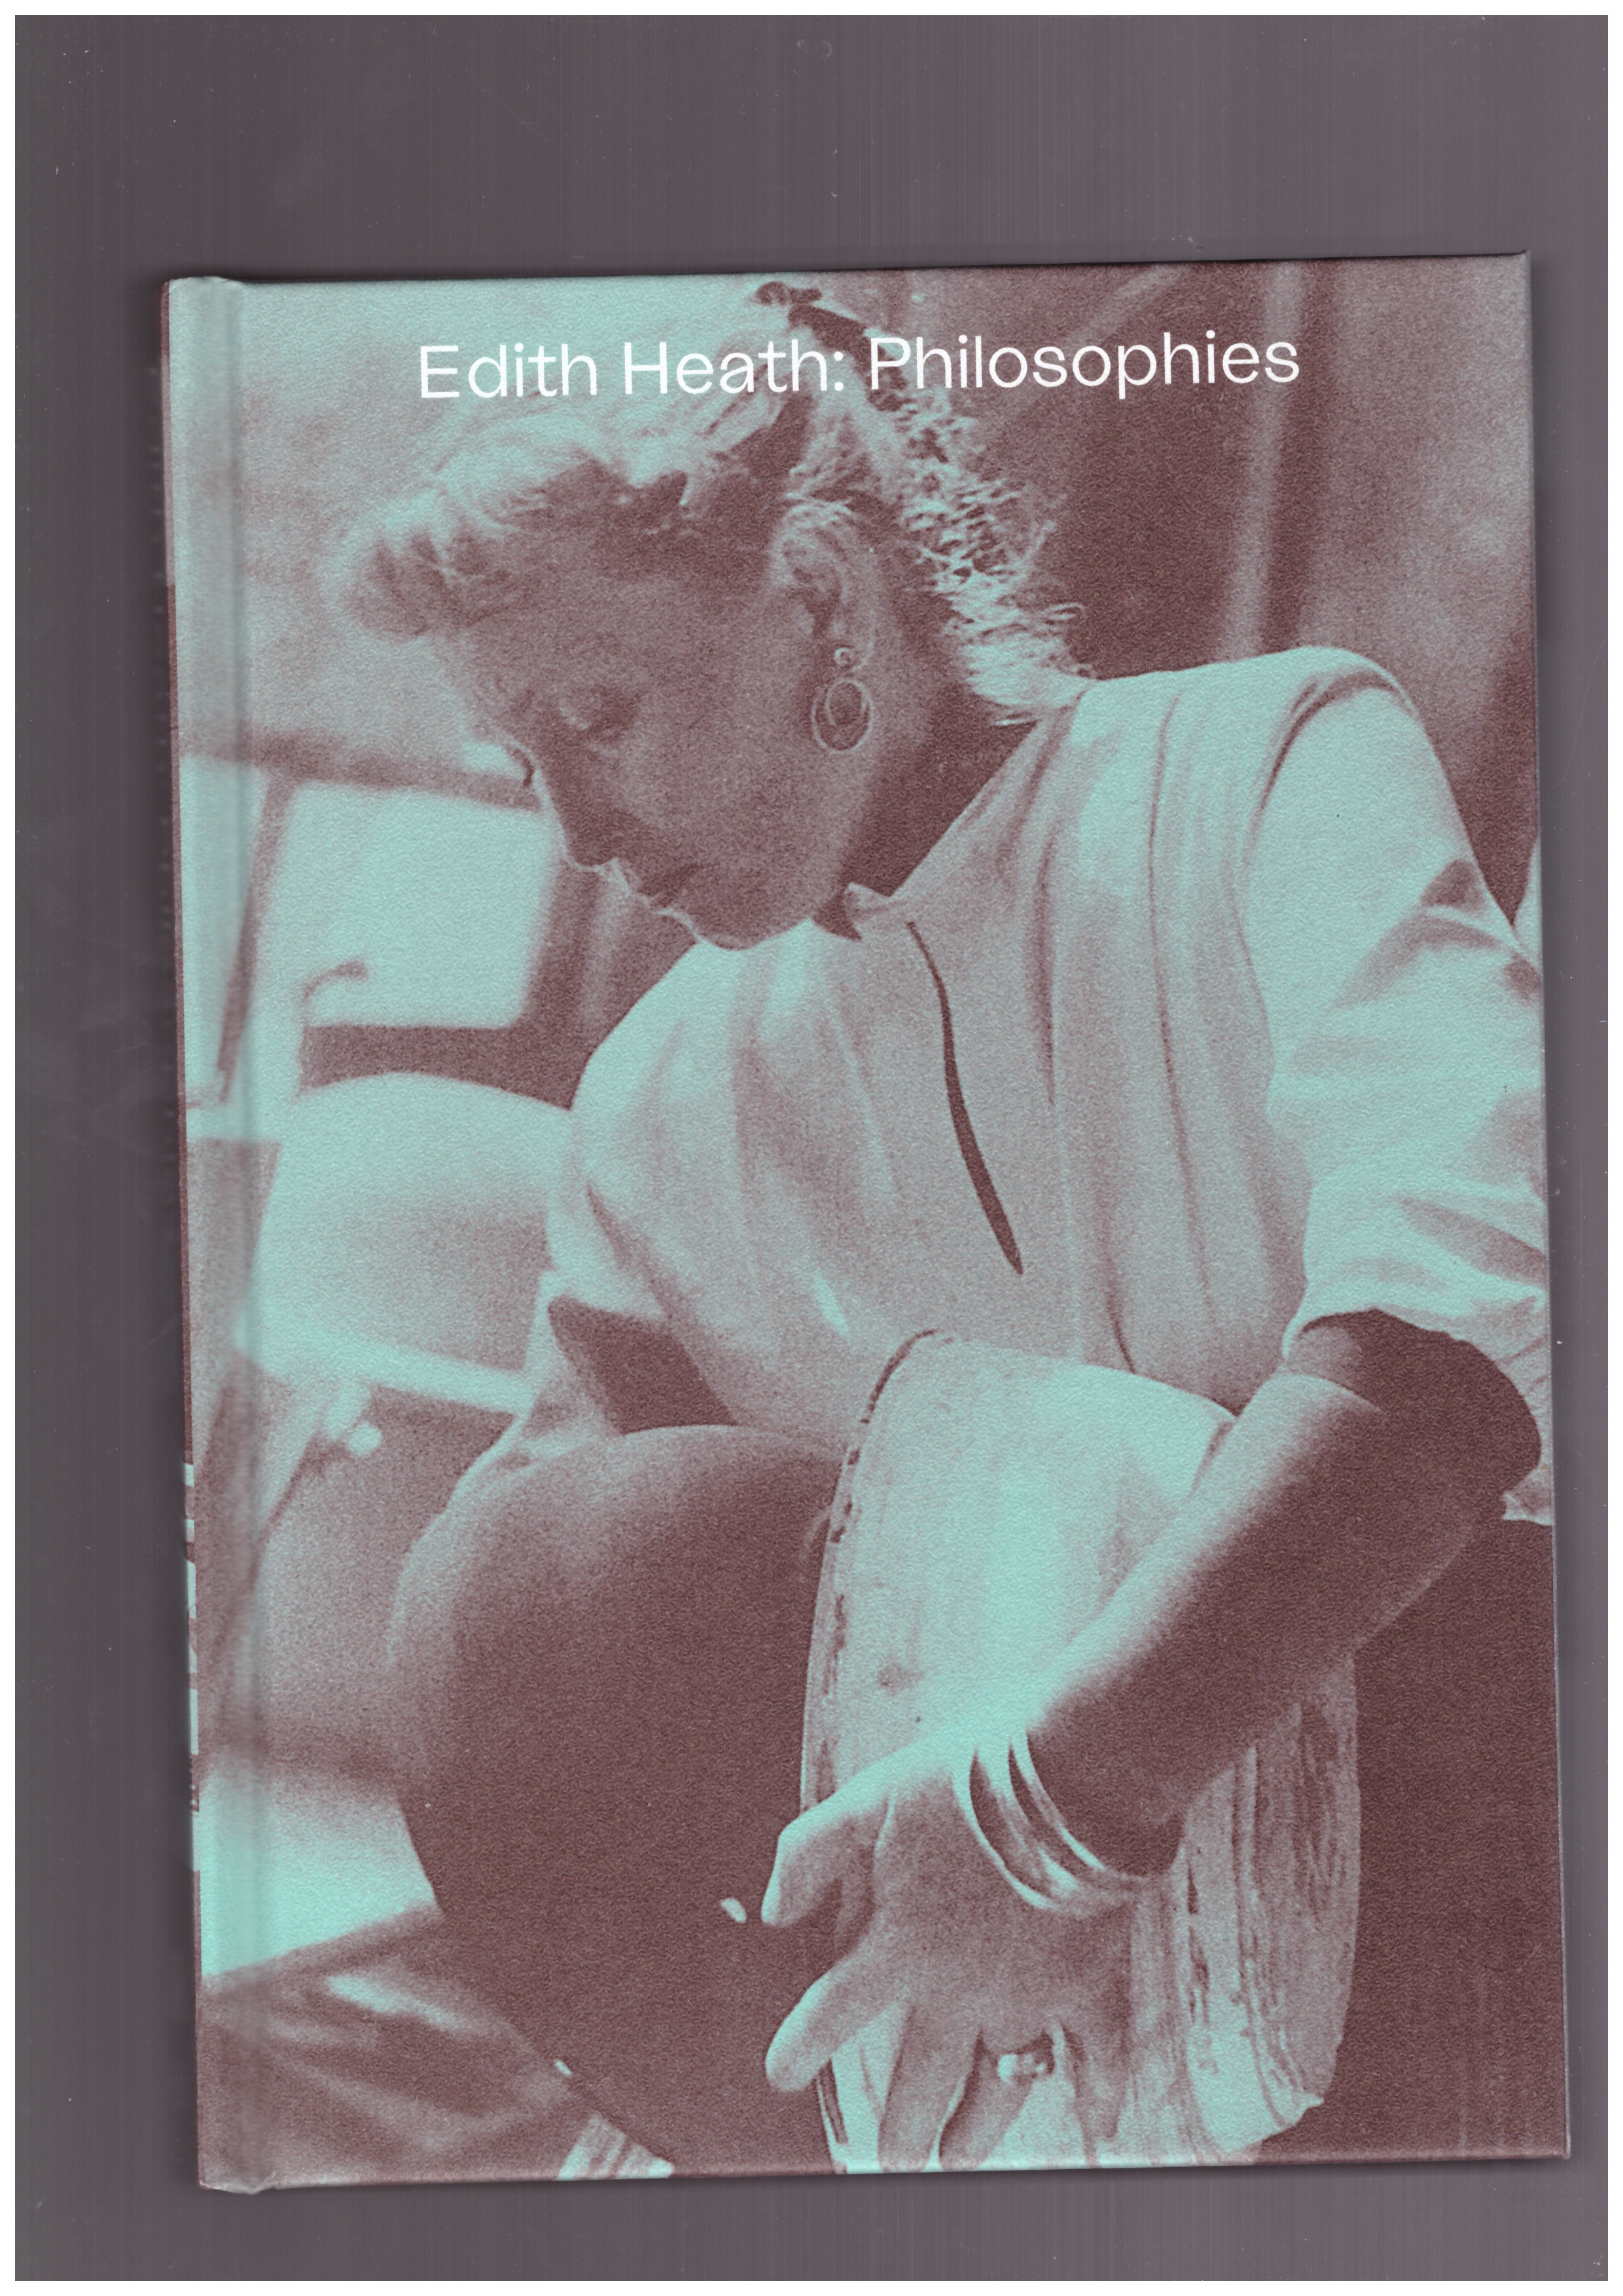 VOLLAND, Jennifer M. ; MARINO, Chris (eds.) - Edith Heath : Philosophies